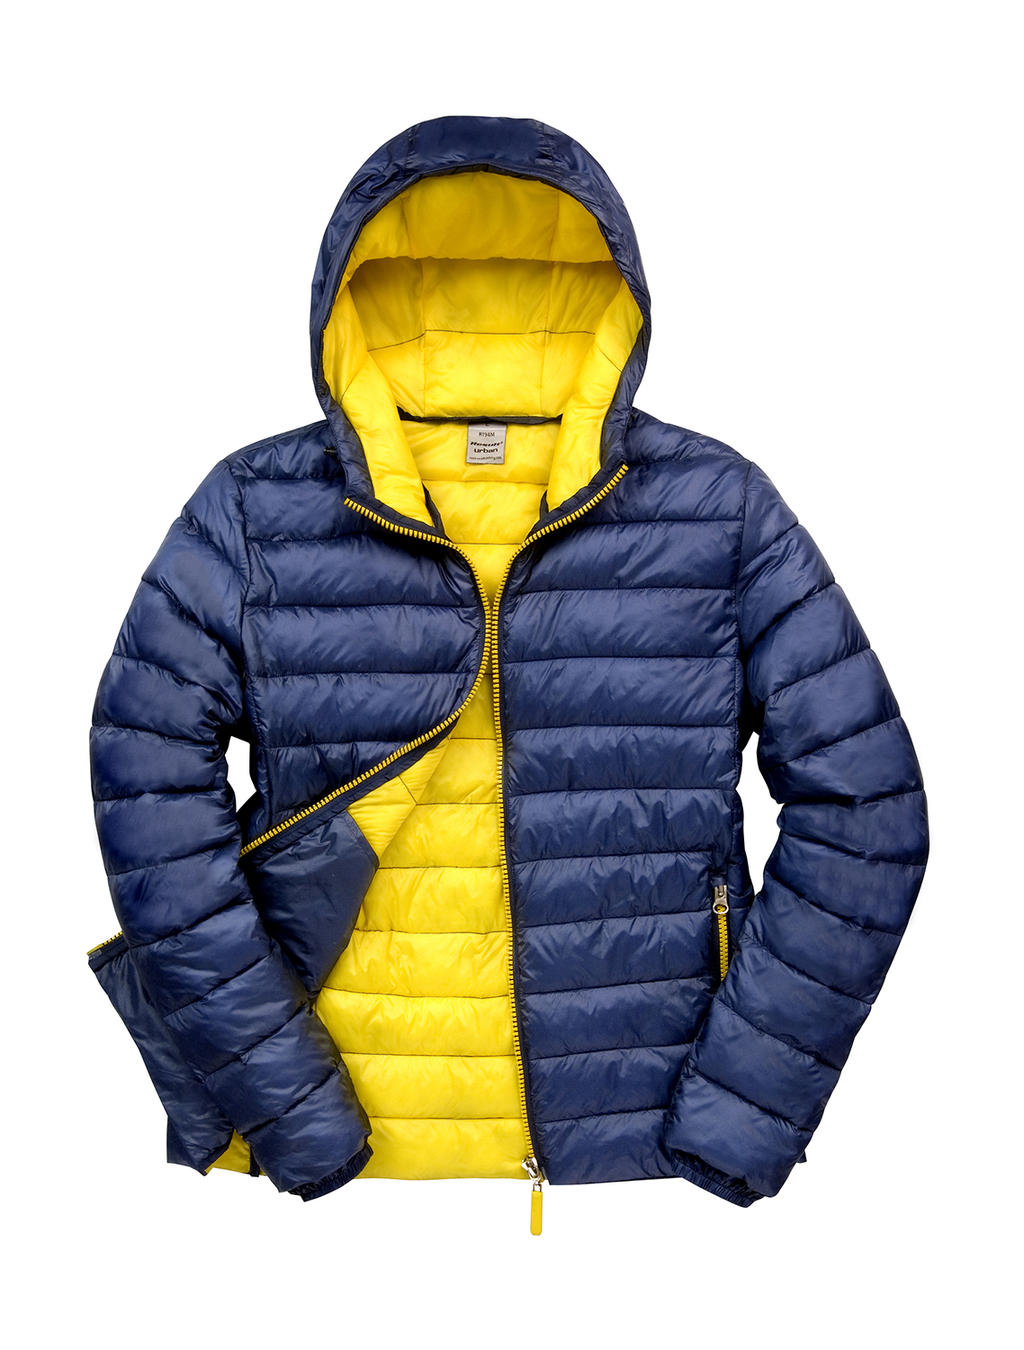 Pánská Snow Bird bunda s kapucí Velikost: 3XL, Barva: Navy/Yellow